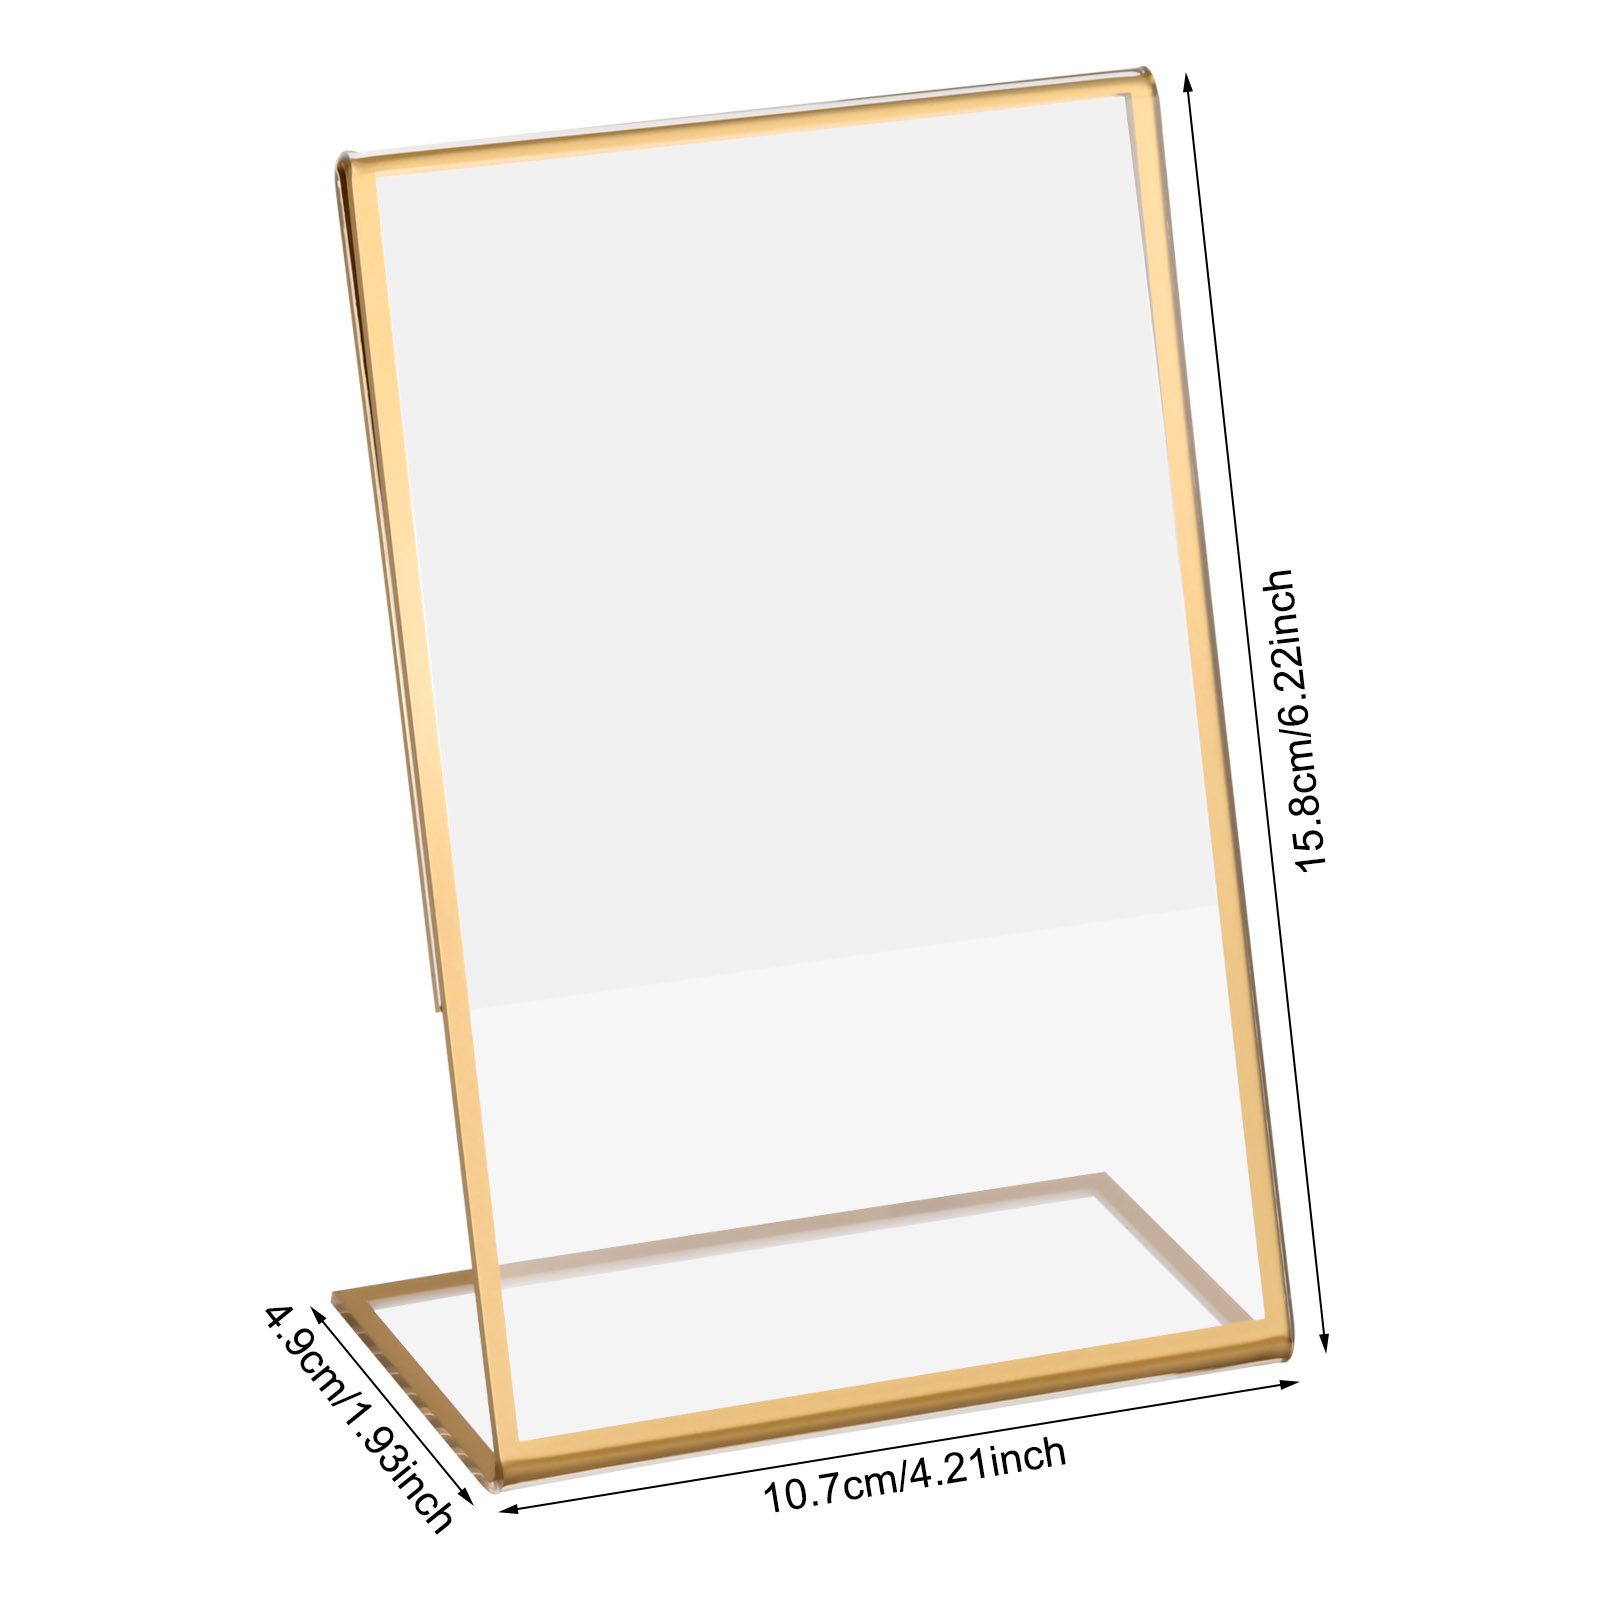 Sign Holders, Frames & Stands, Display Frame and Stands